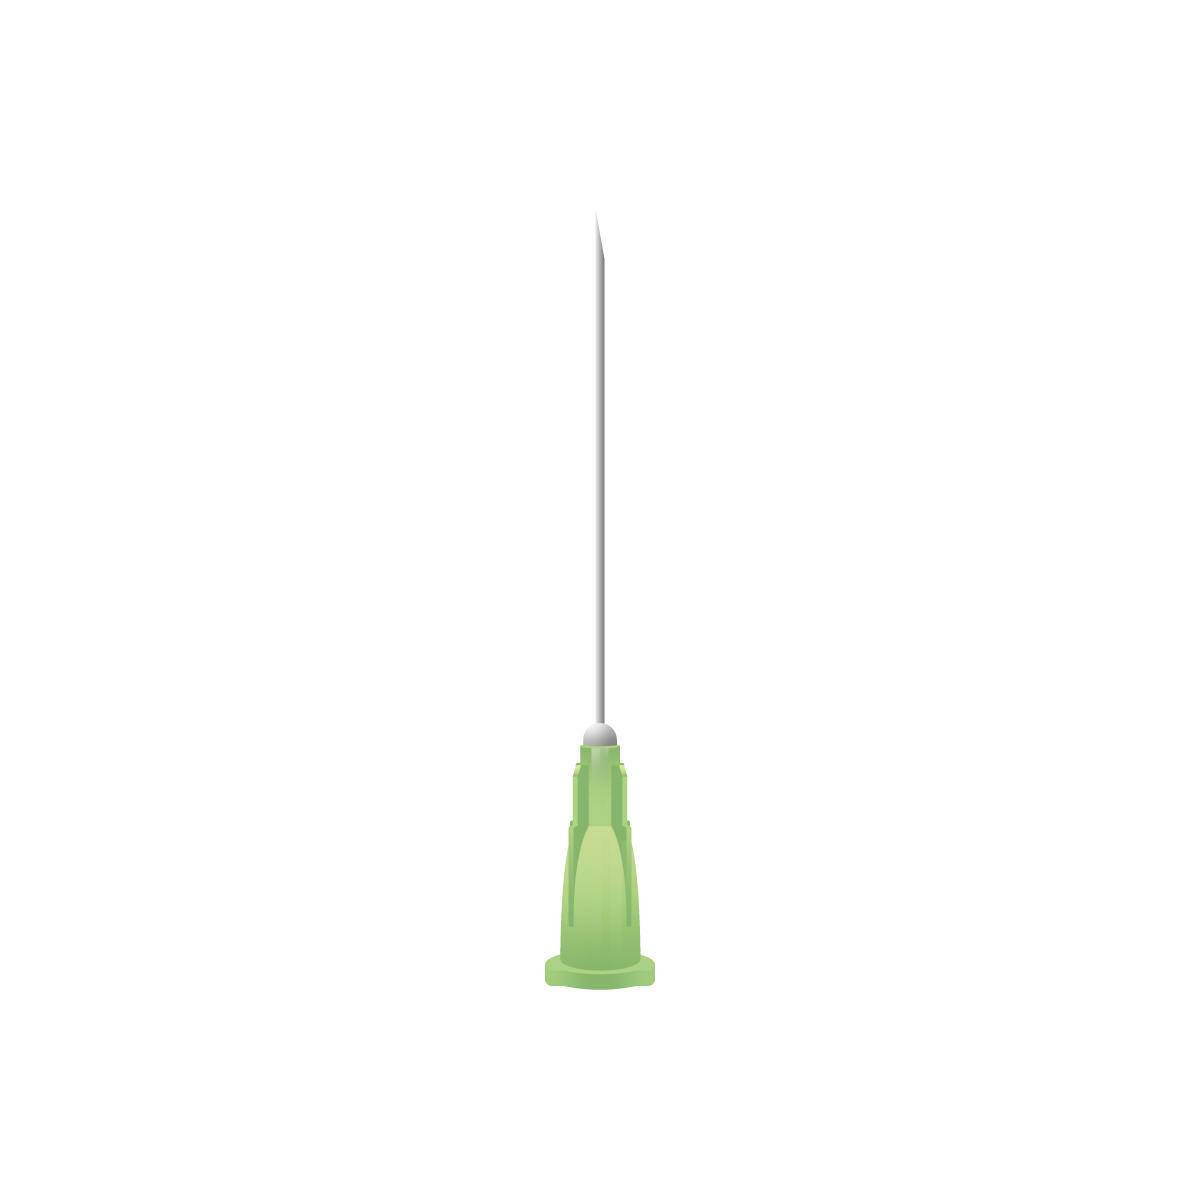 21g Green 1.5 inch BD Microlance Needles